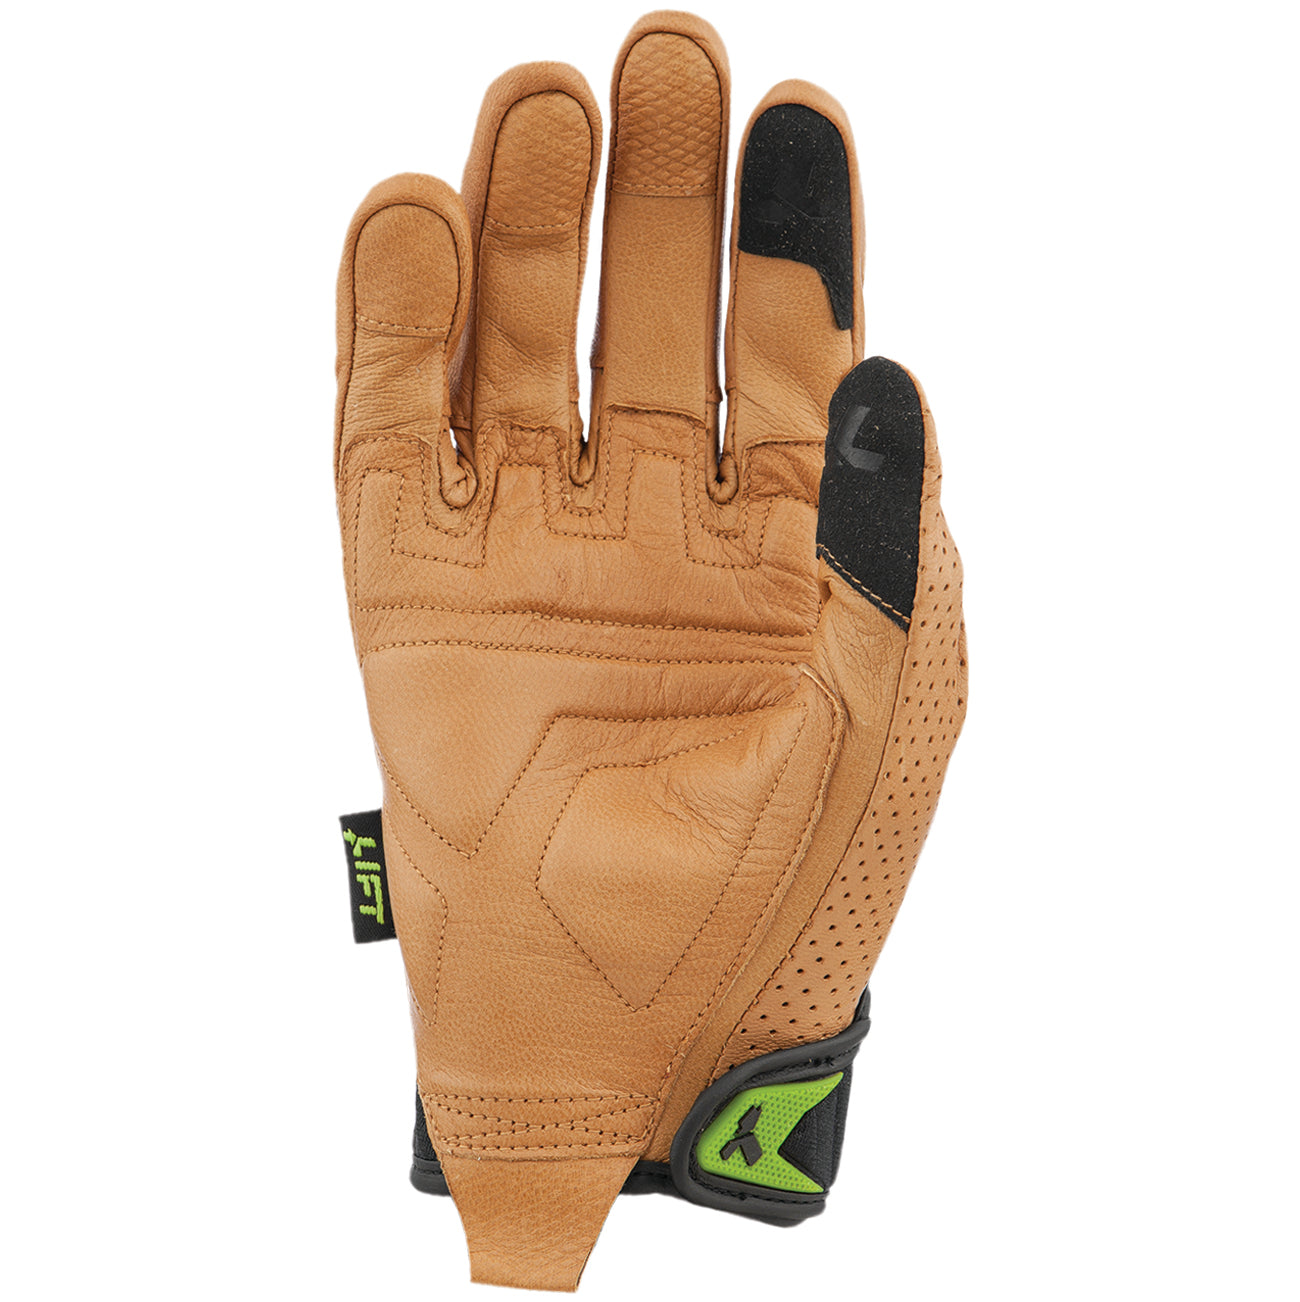 LIFT Safety - TACKER Glove (Camo)